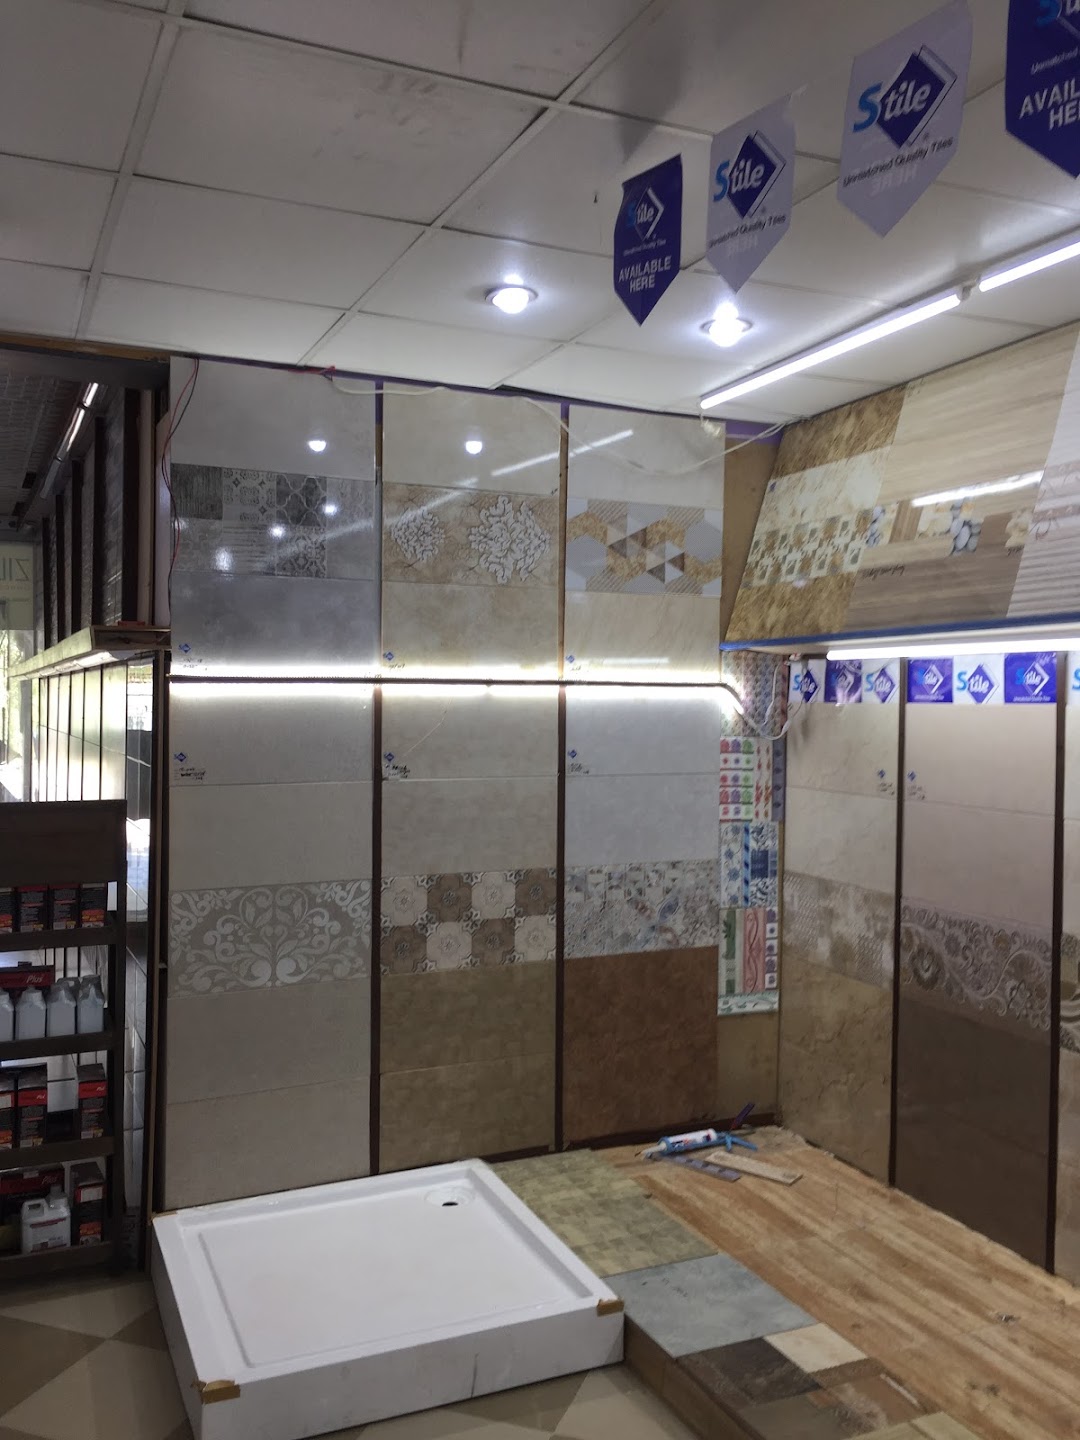 Qihome bathroom tiles and fitting